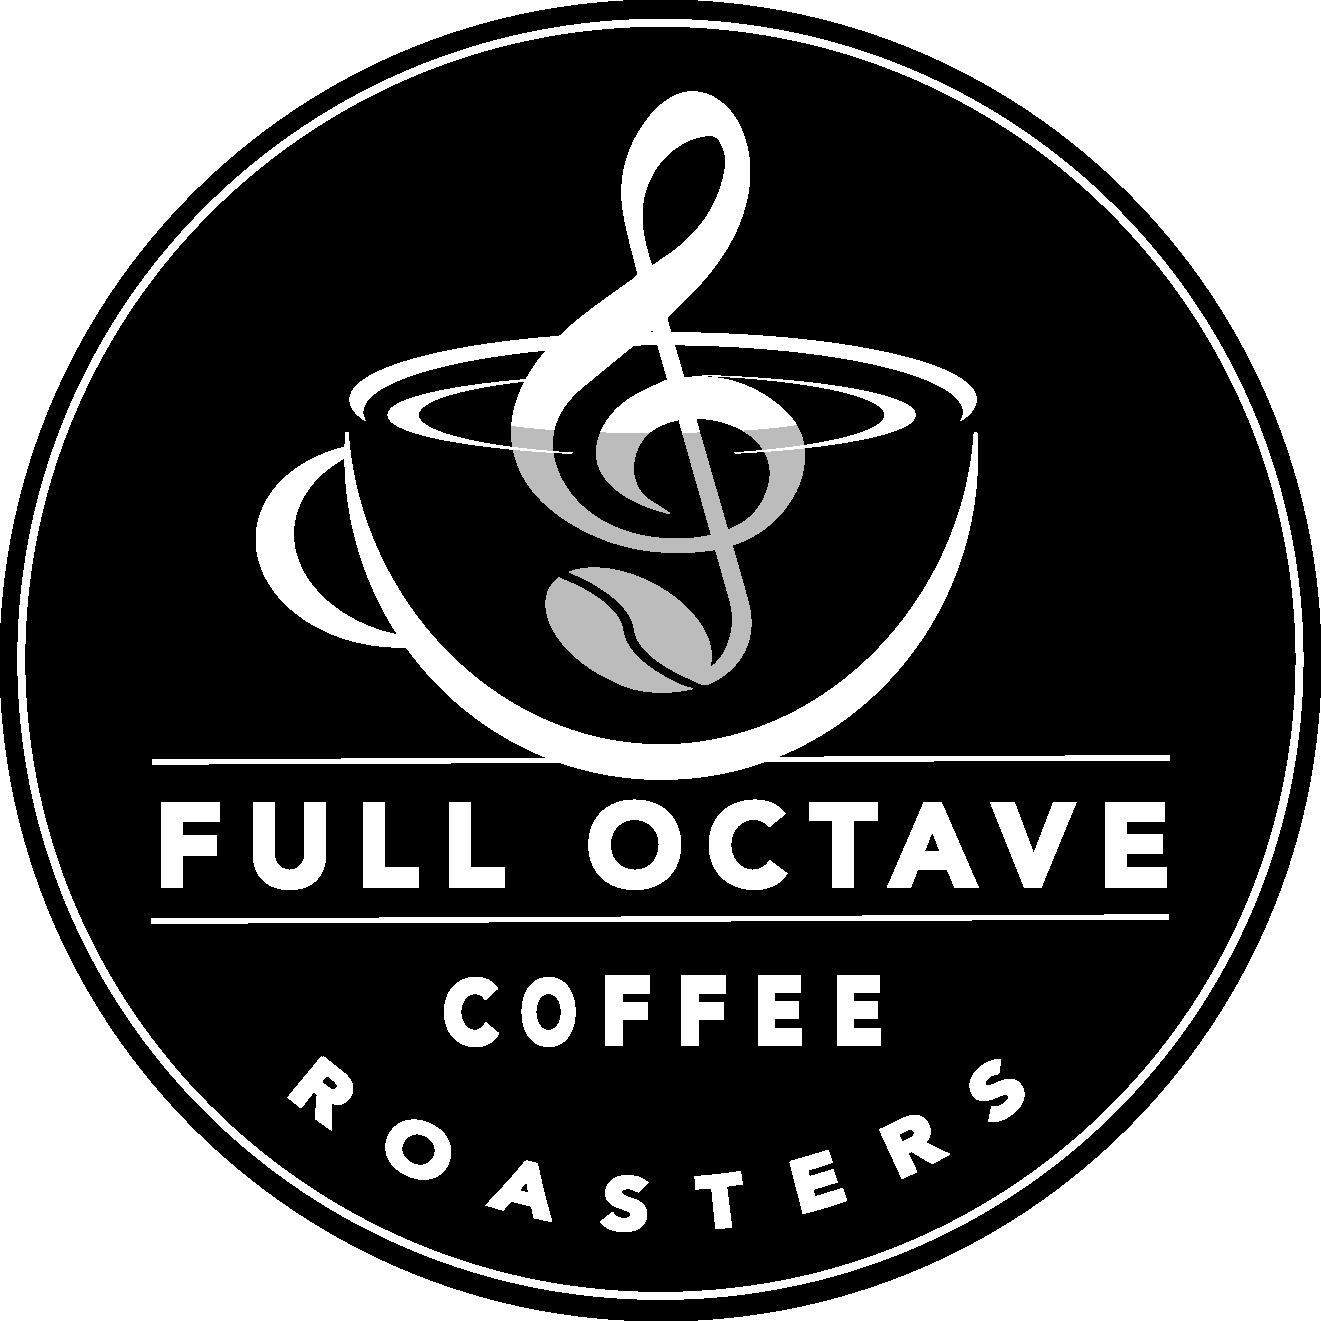 Full Octave Coffee Roaster logo 